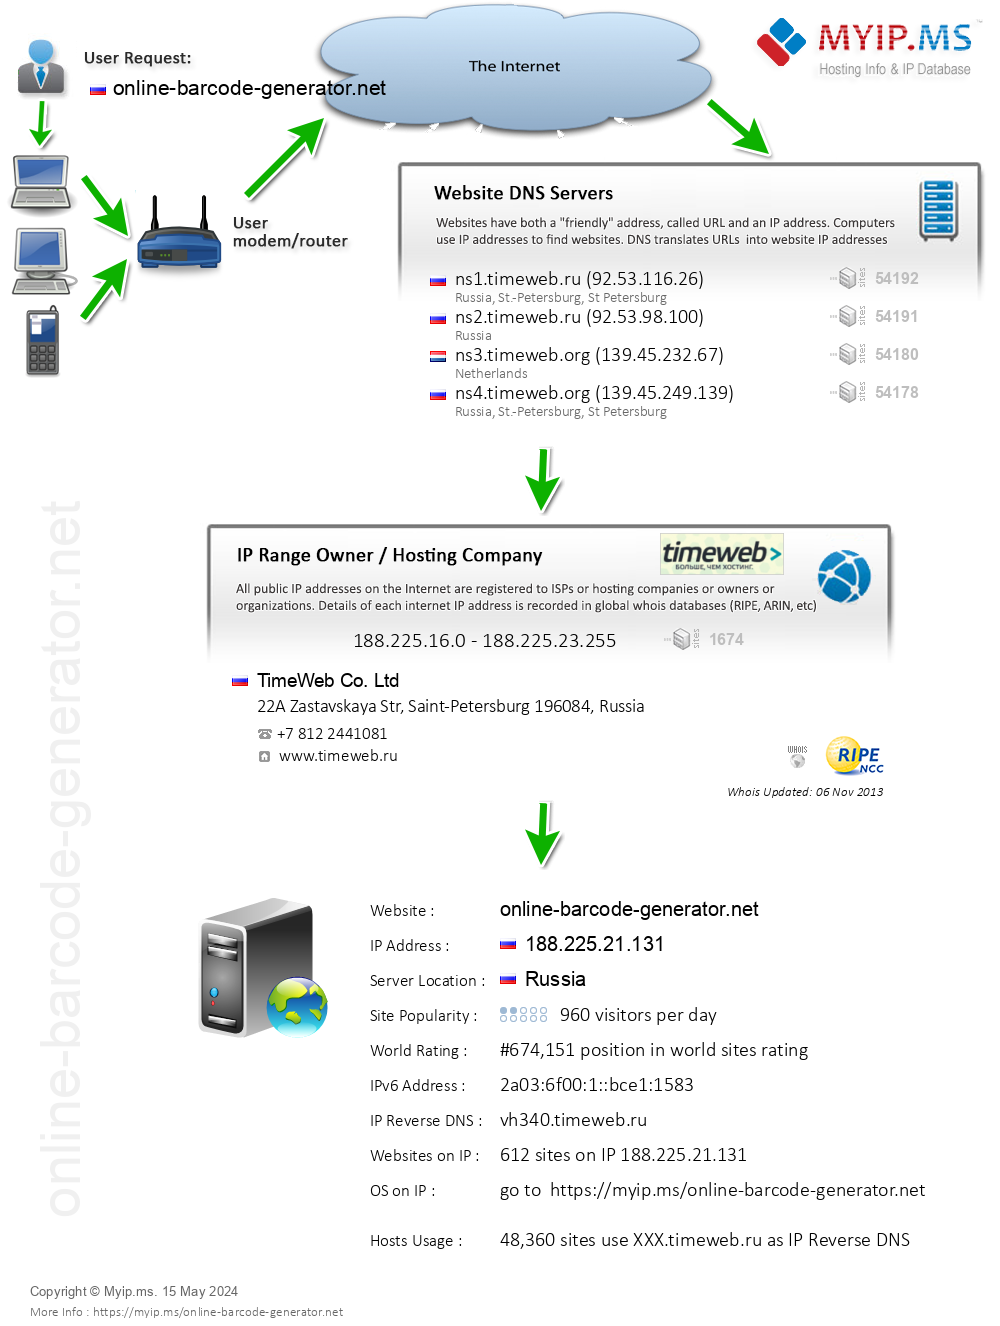 Online-barcode-generator.net - Website Hosting Visual IP Diagram